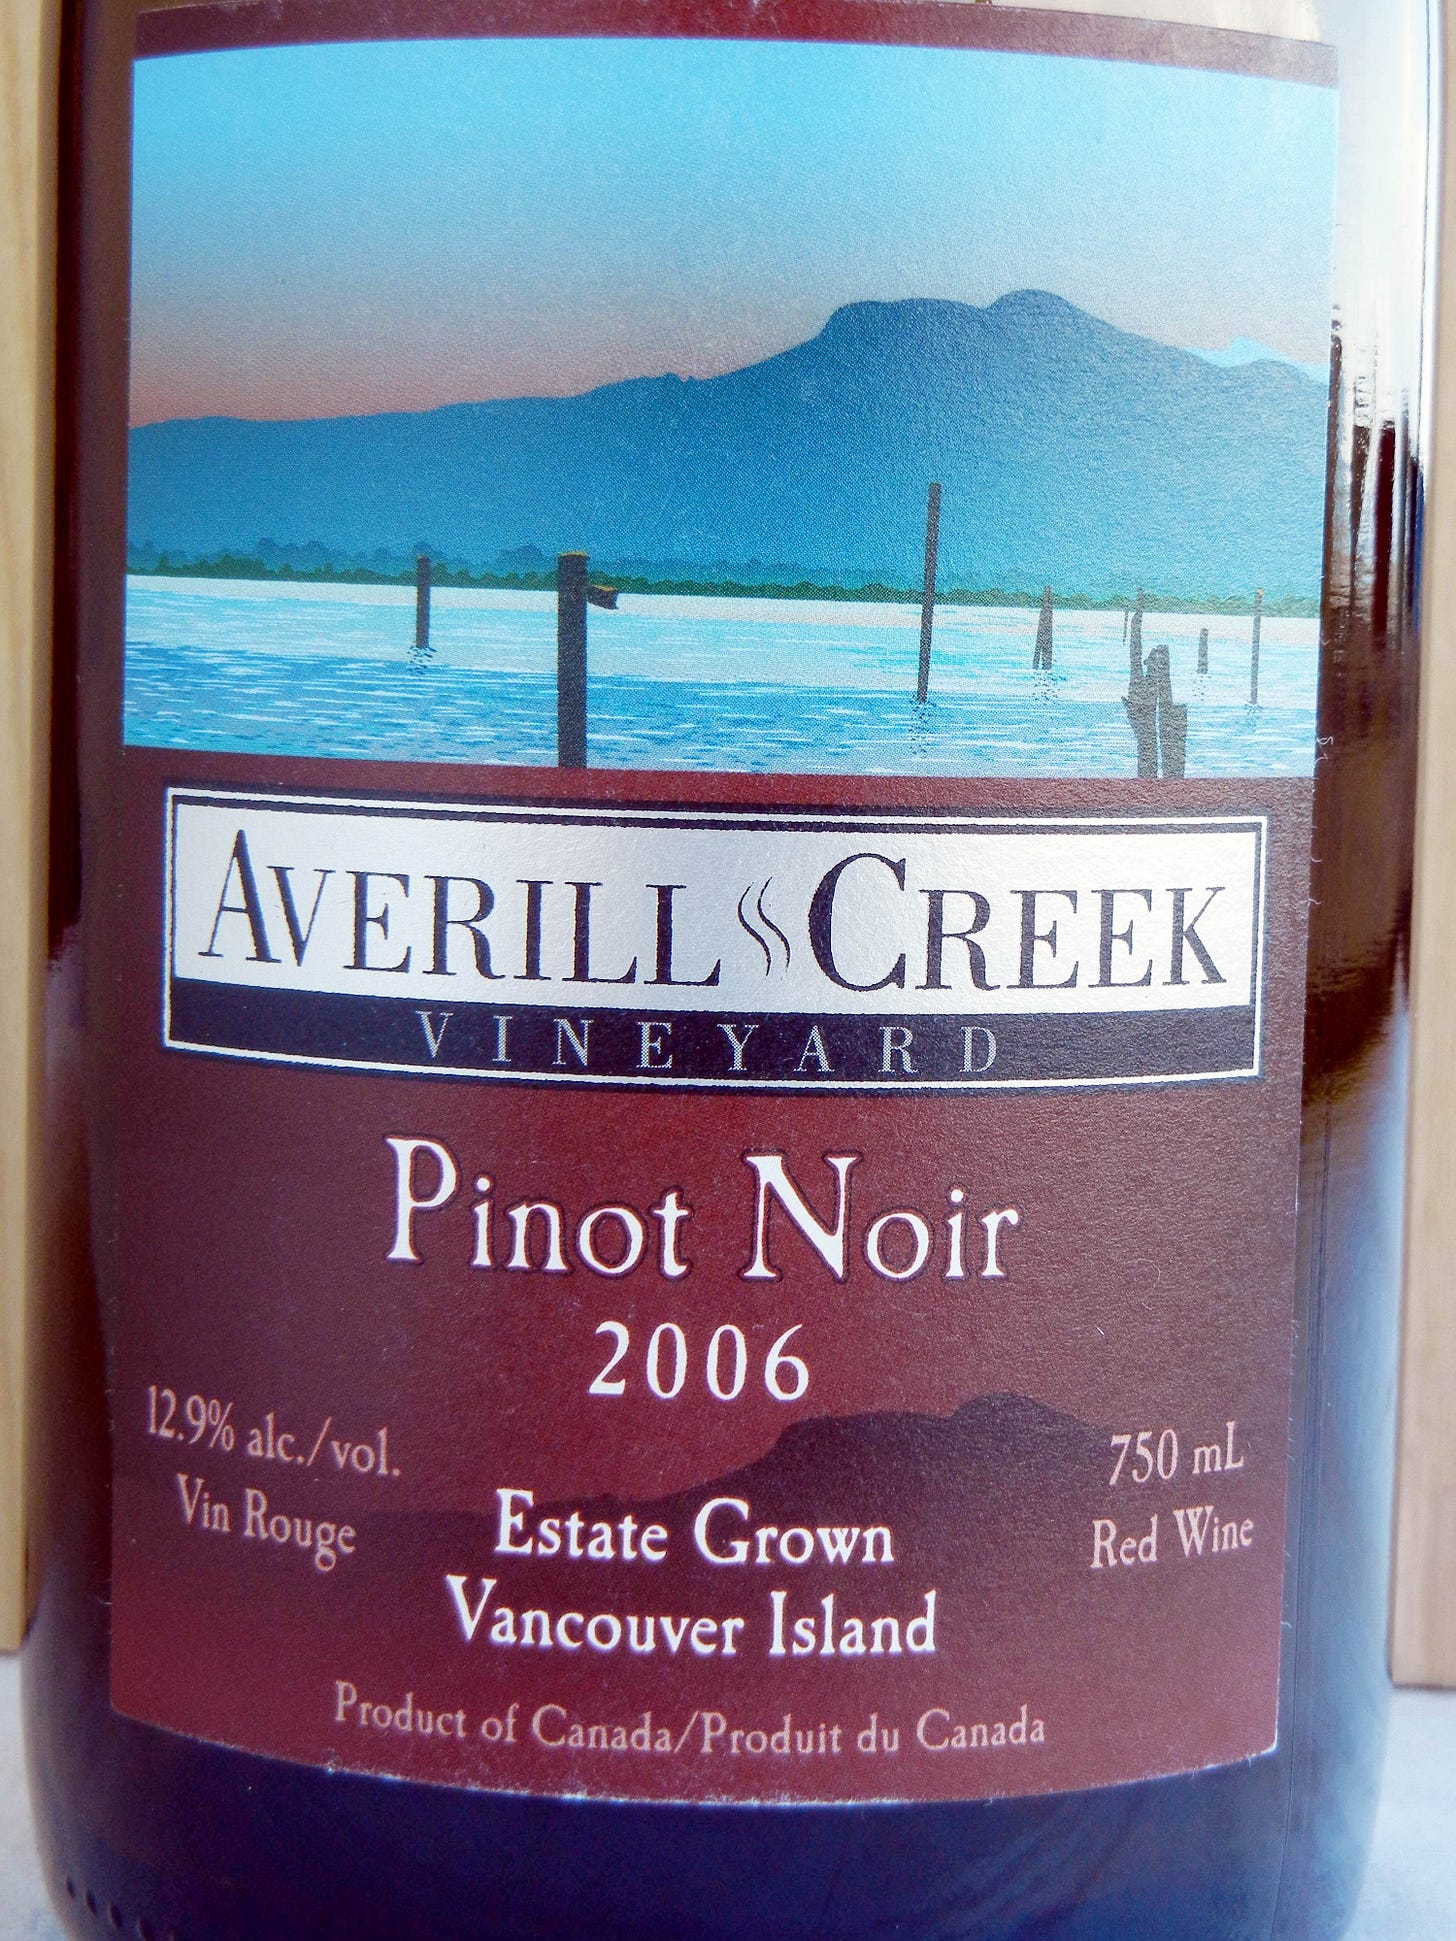 Averill Creek Pinot Noir 2006 Label - BC Pinot Noir Tasting Review 12